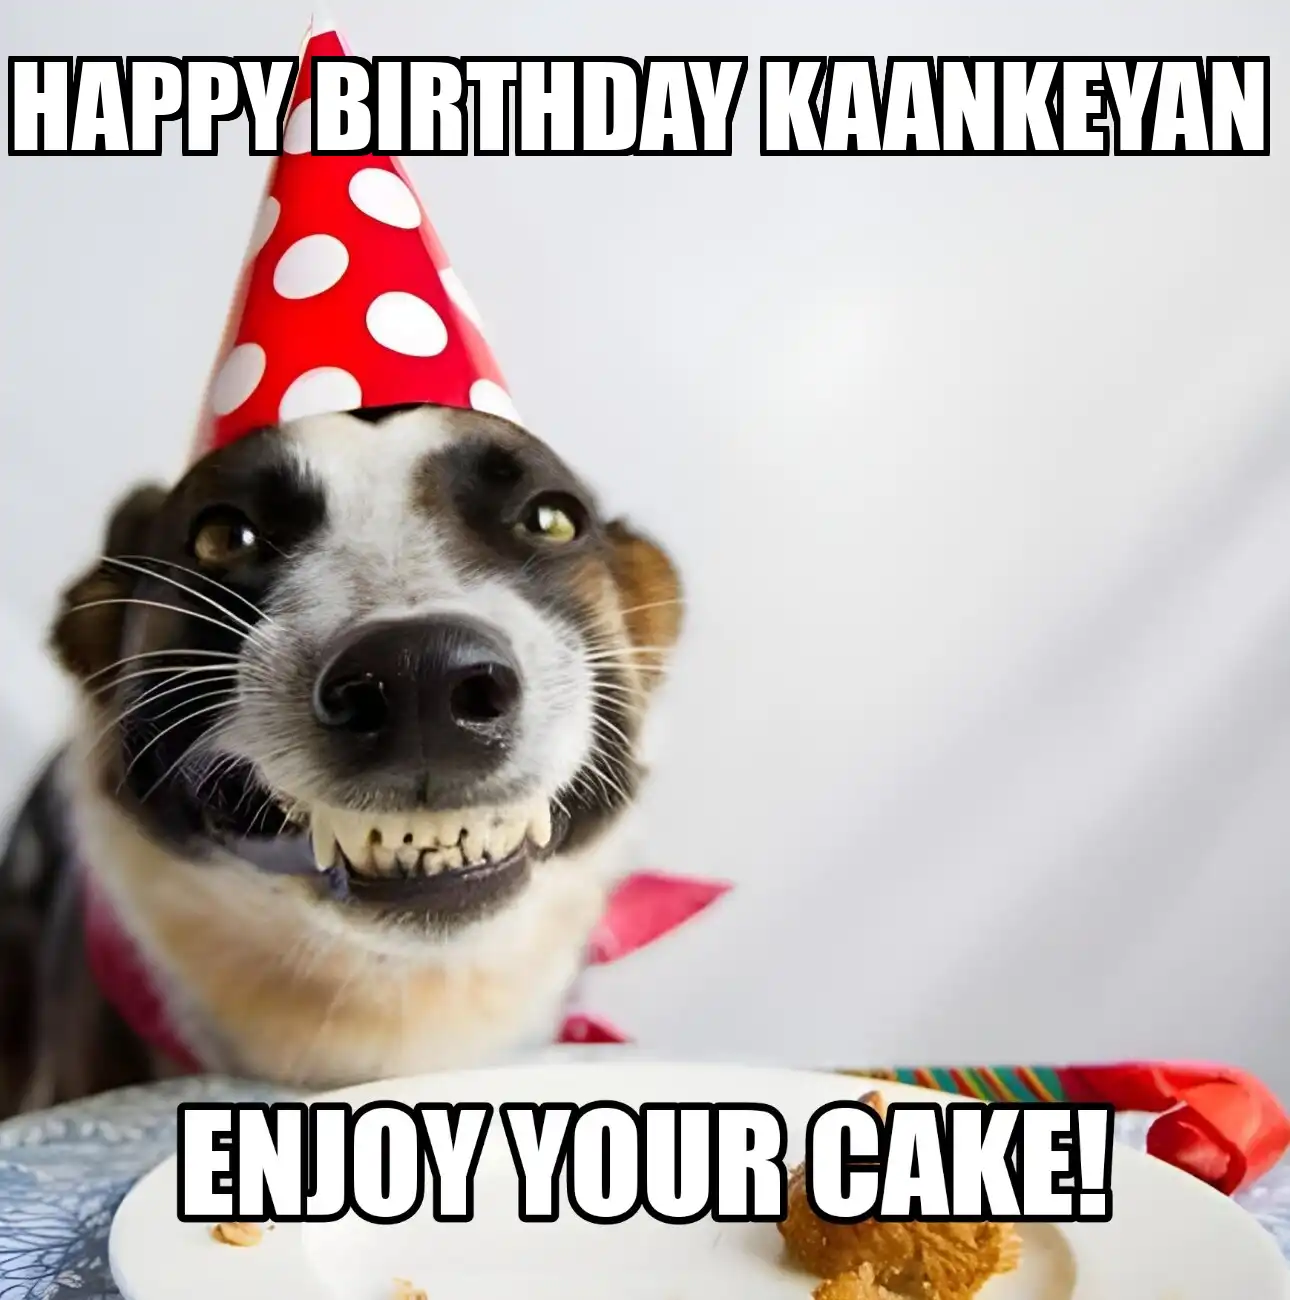 Happy Birthday Kaankeyan Enjoy Your Cake Dog Meme